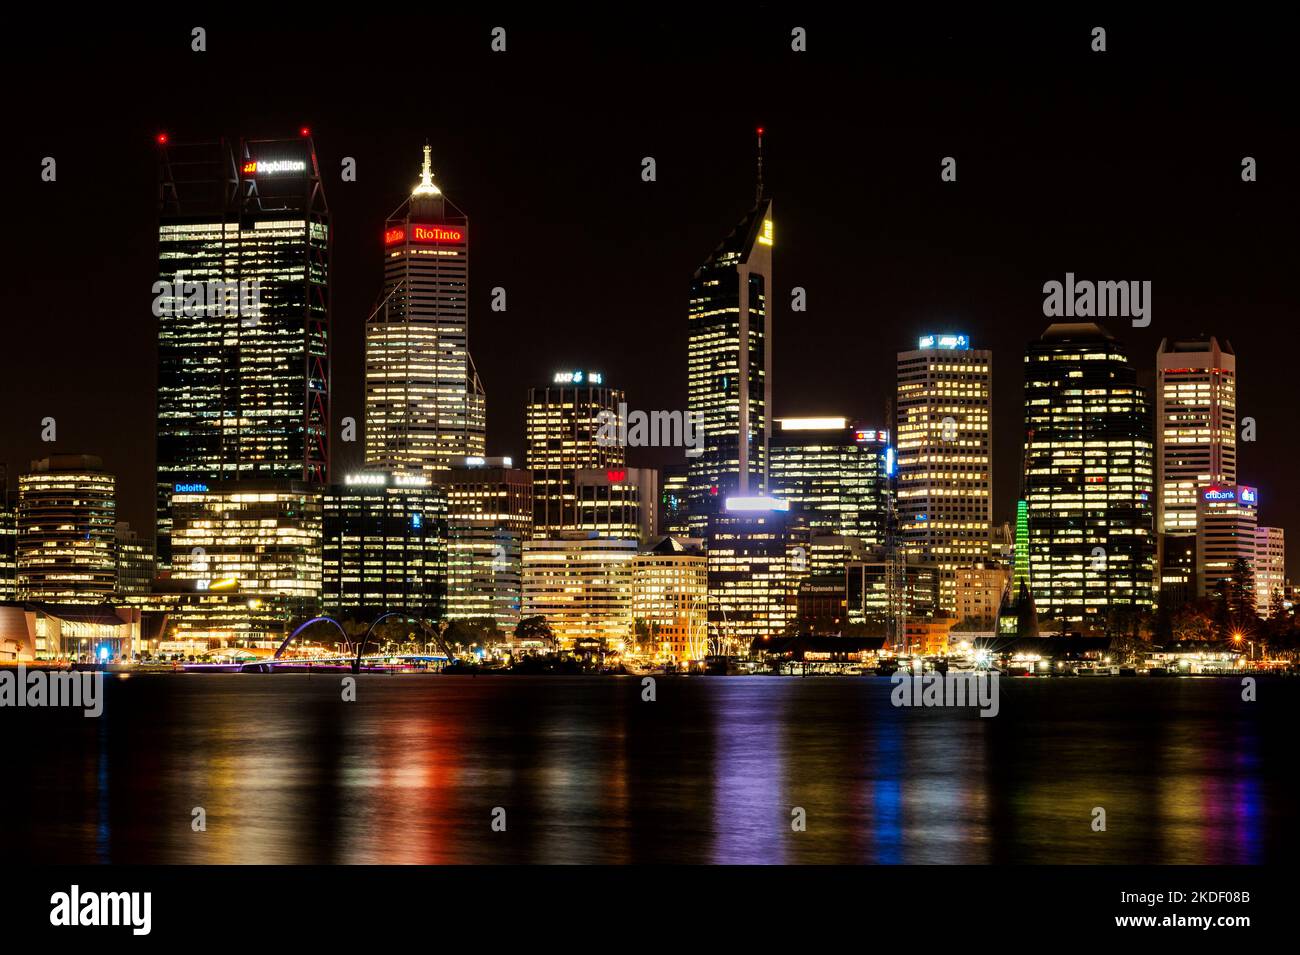 Perth City Lights at night. Stock Photo